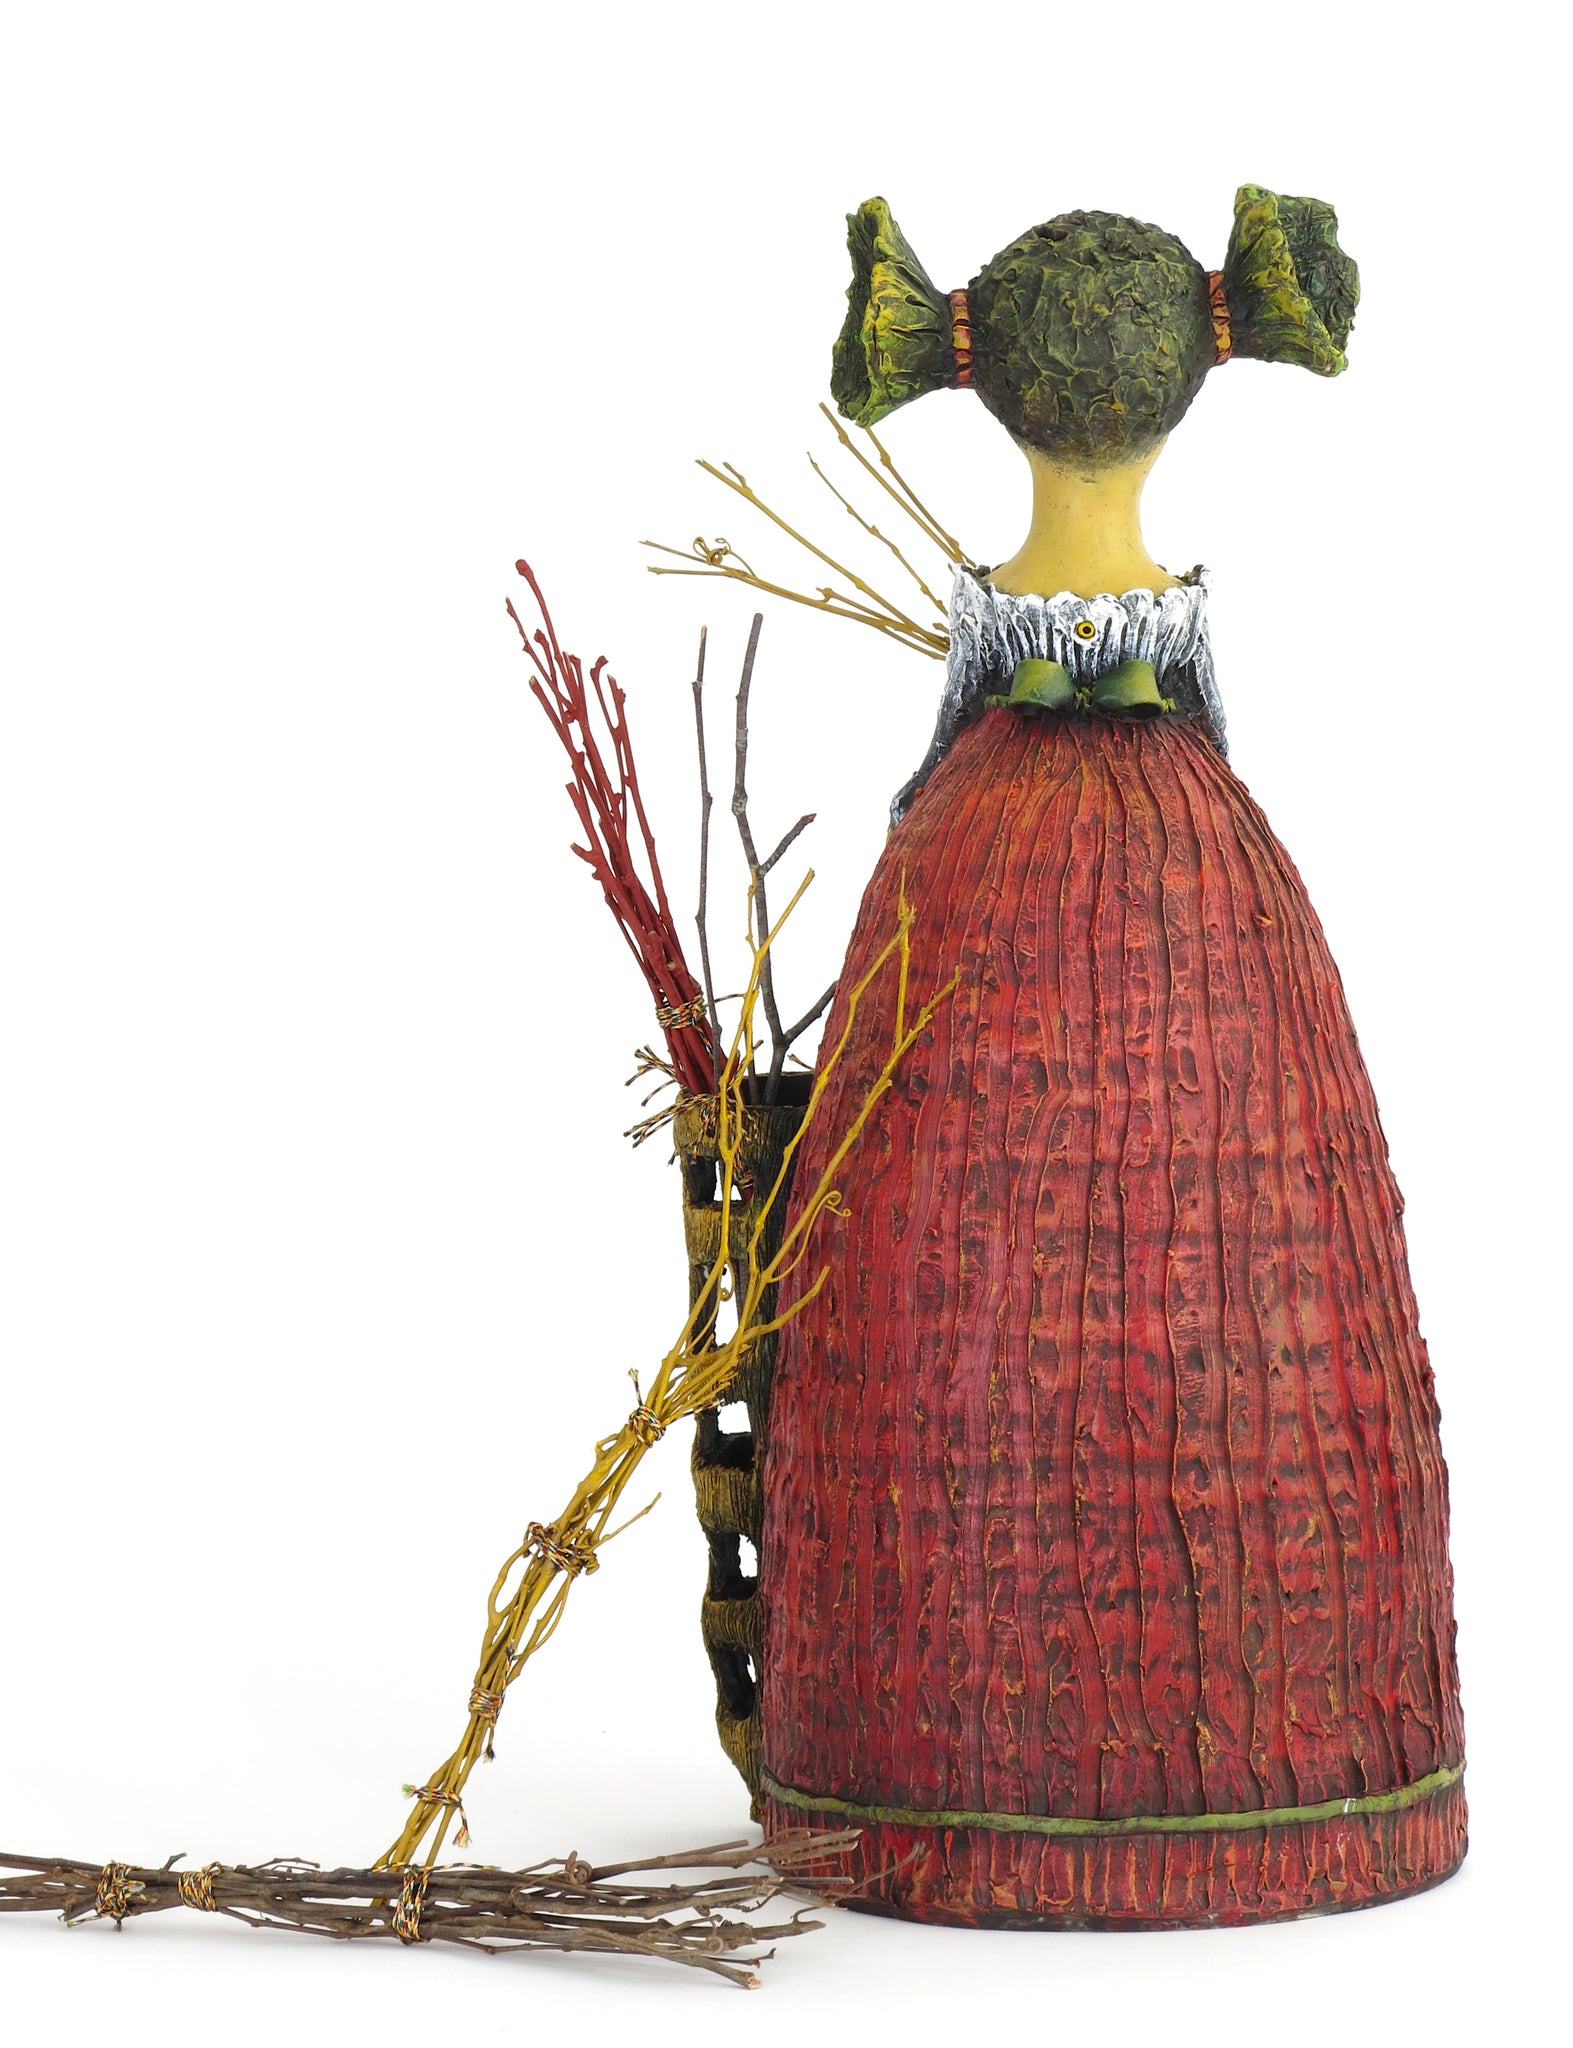 SOLD  "Fiona Gathers Sticks to Fortify Her Boundaries" Original ceramic sculpture by Jacquline Hurlbert